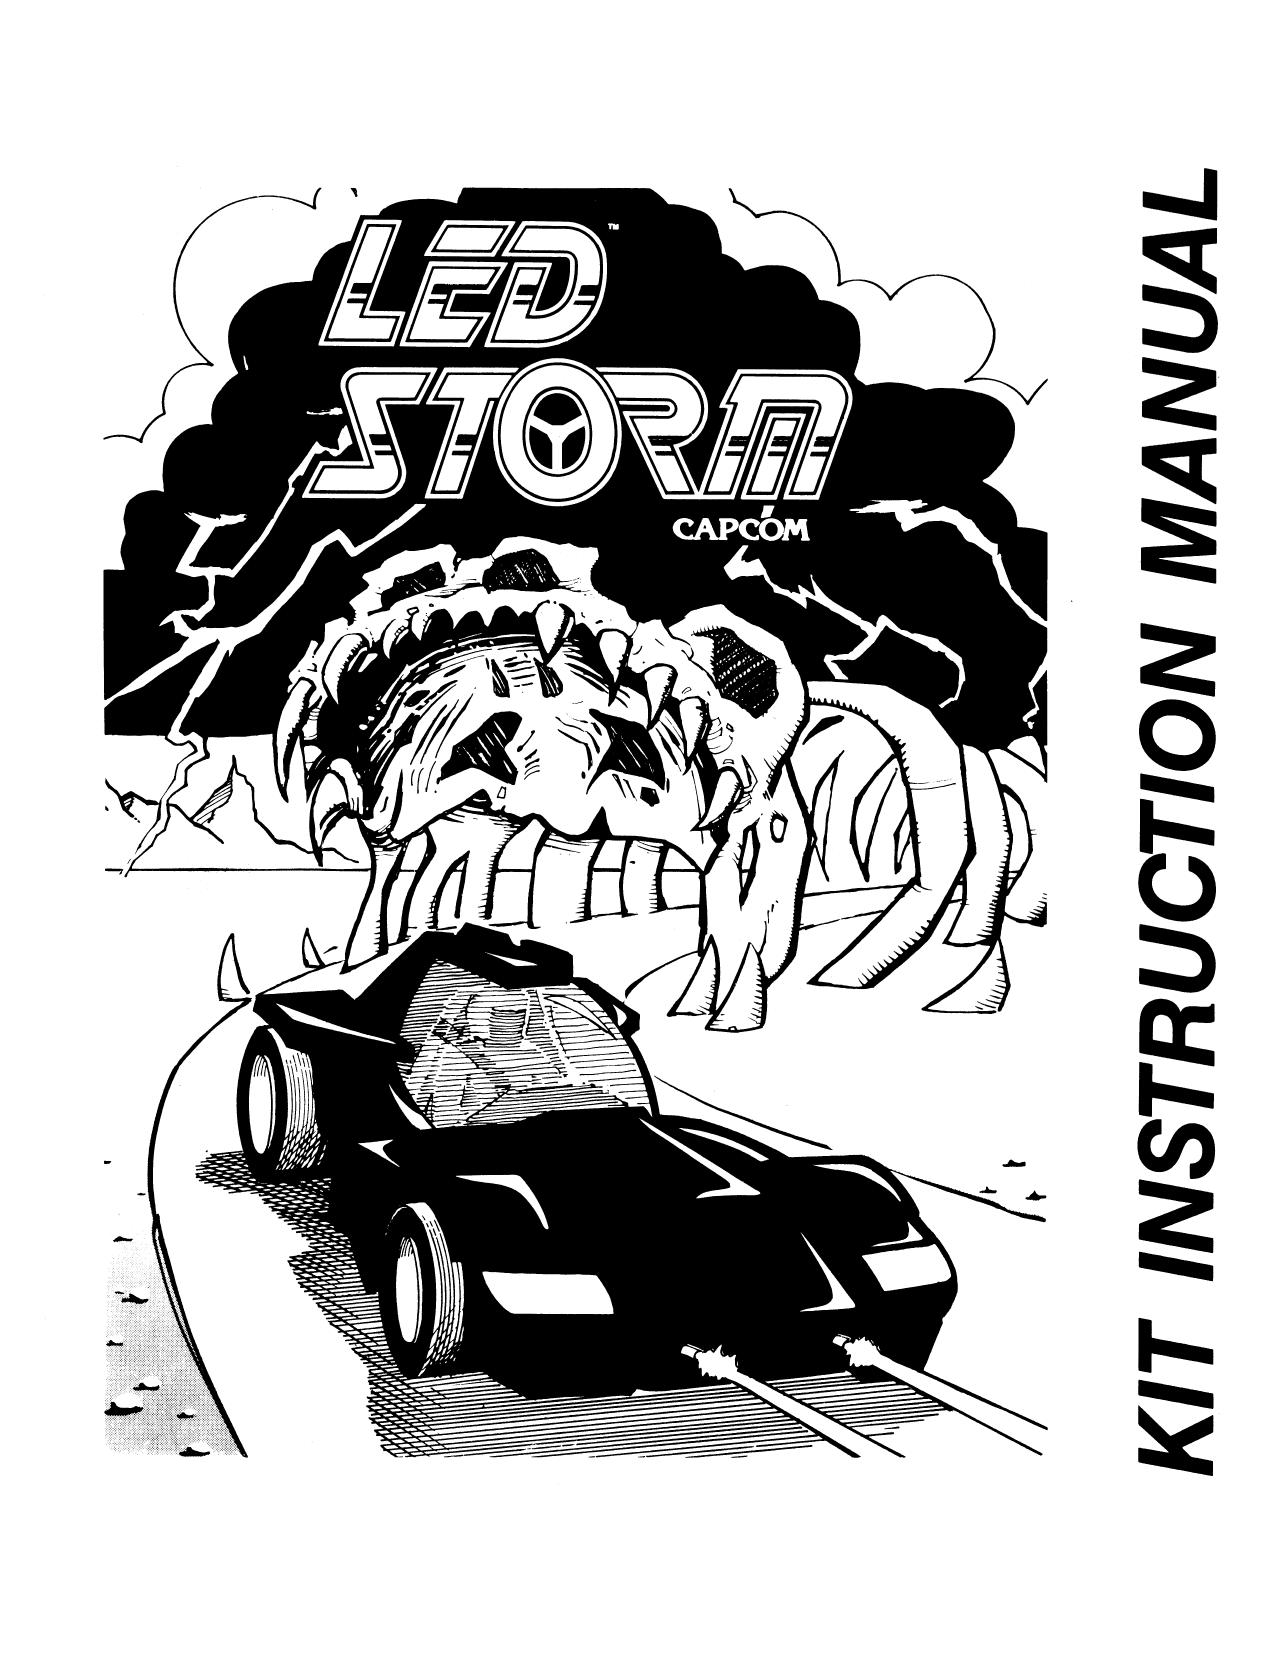 Led Storm Manual